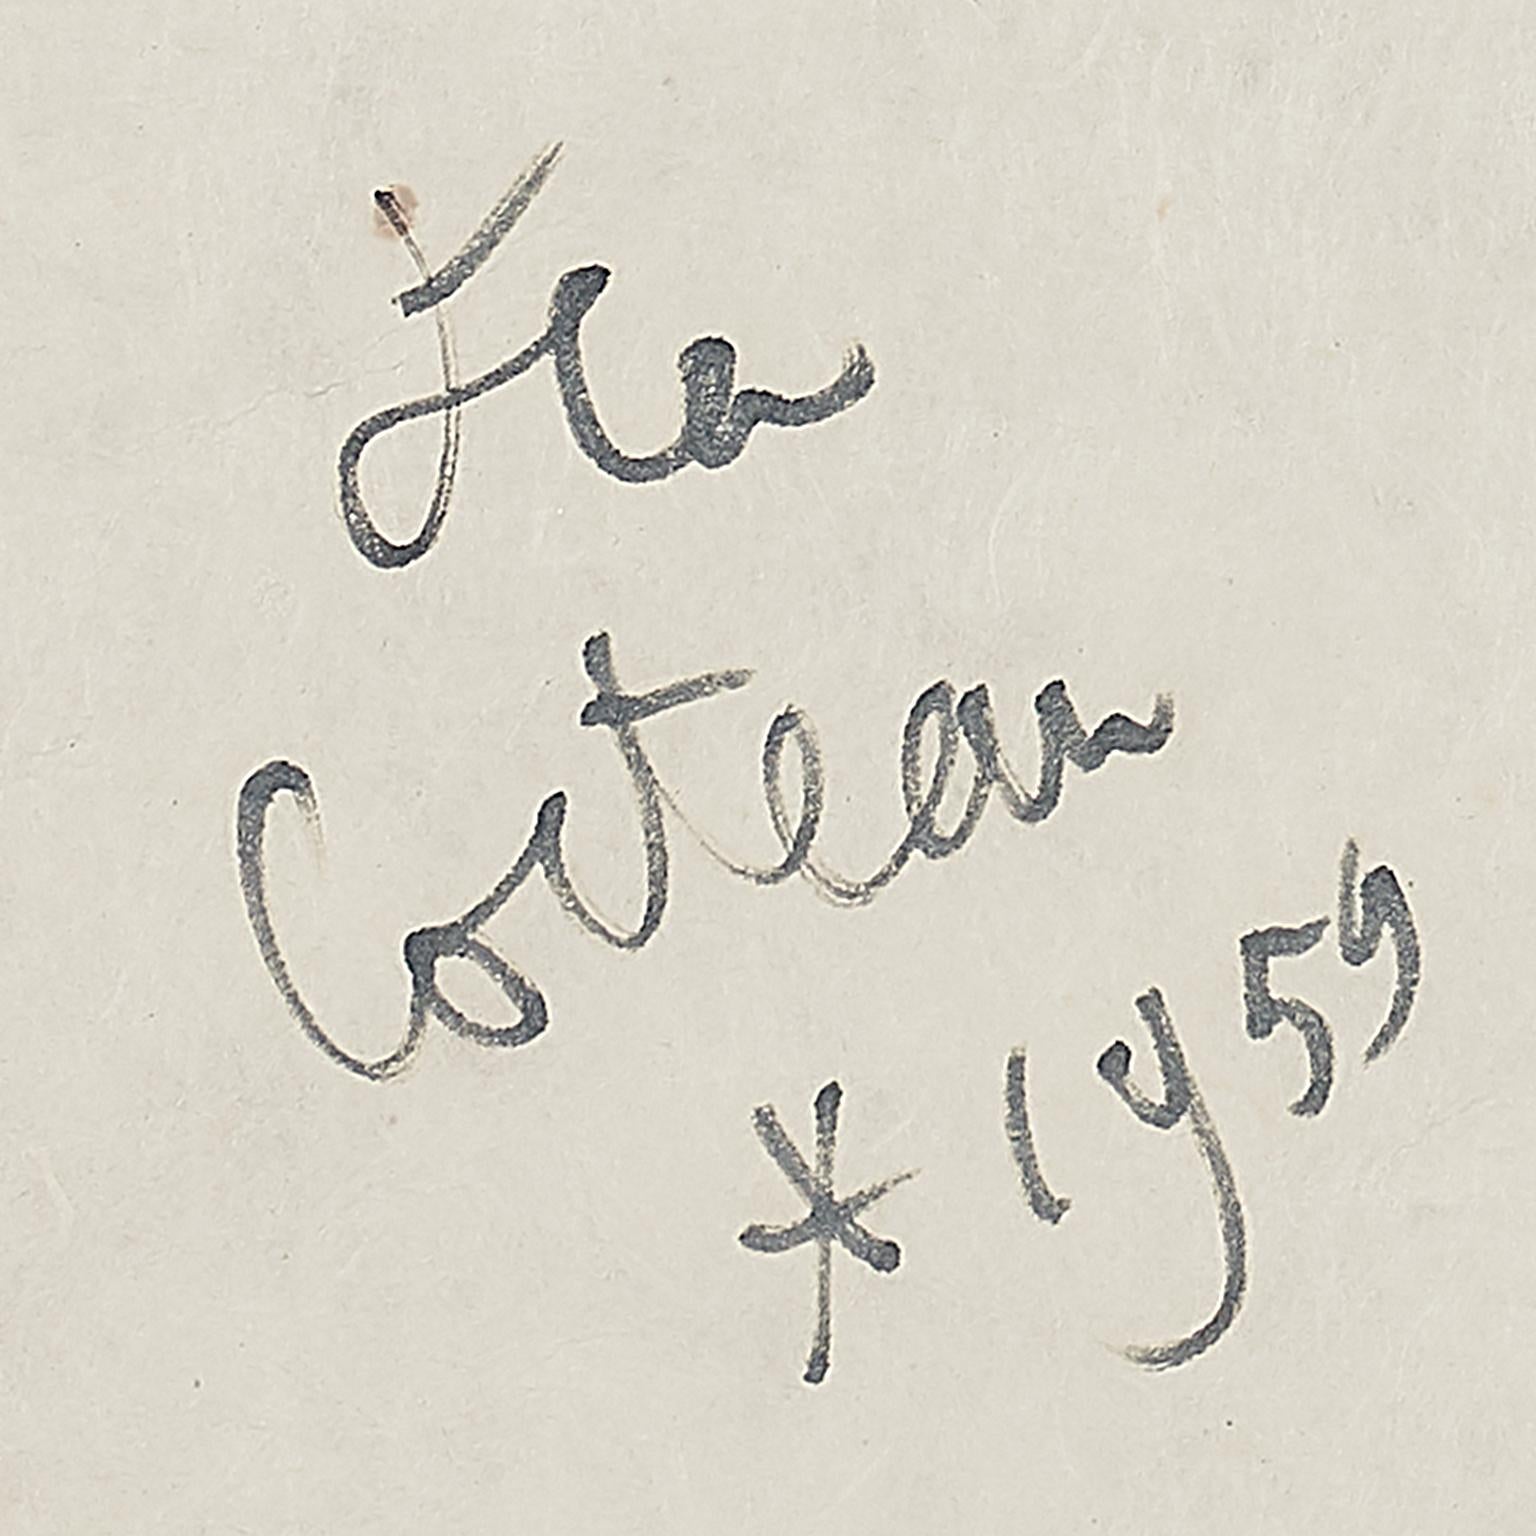 Jean Cocteau (1889-1963).
